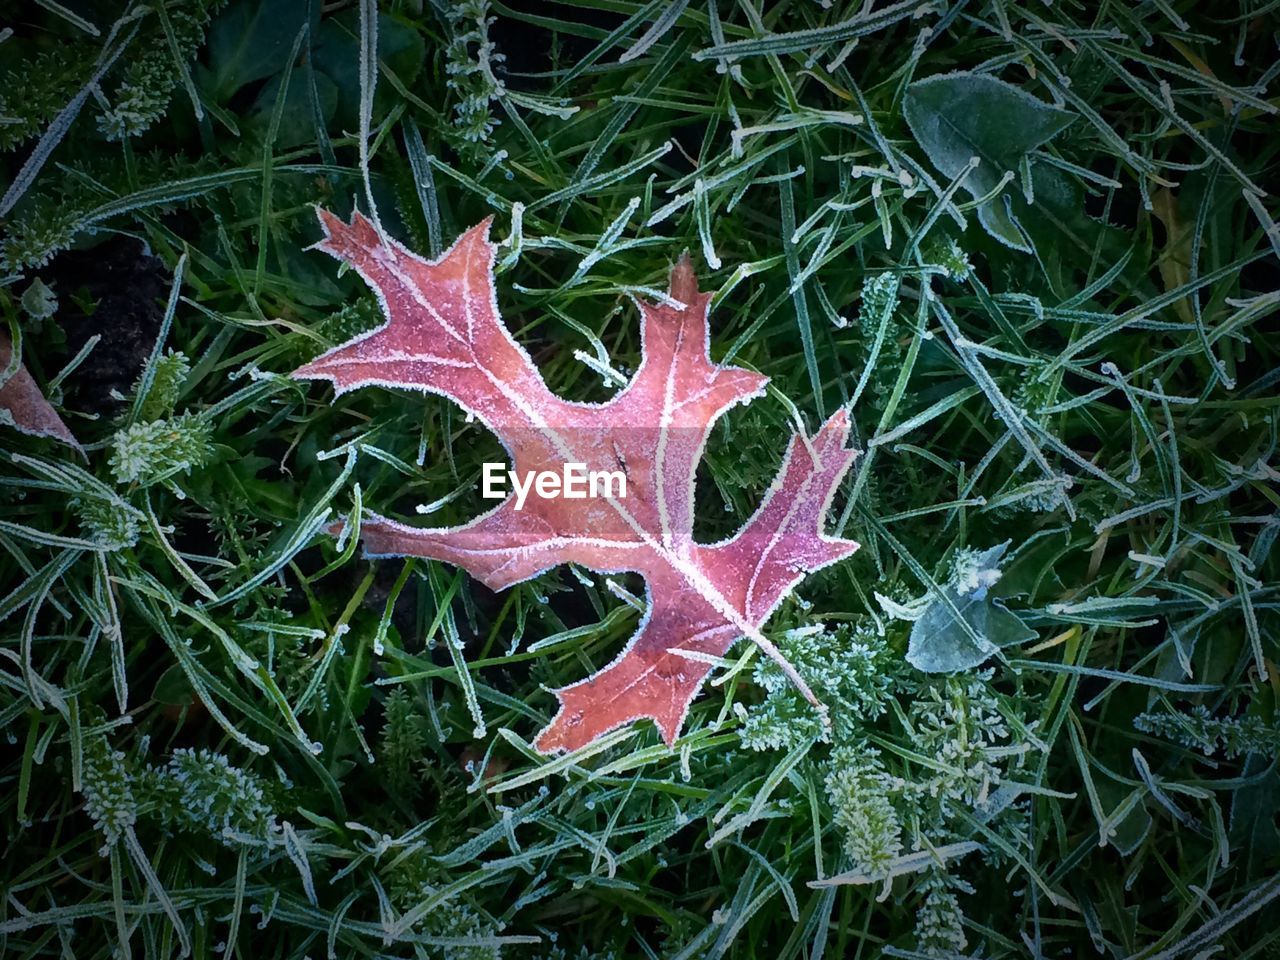 Dry oak leaf on grass during winter